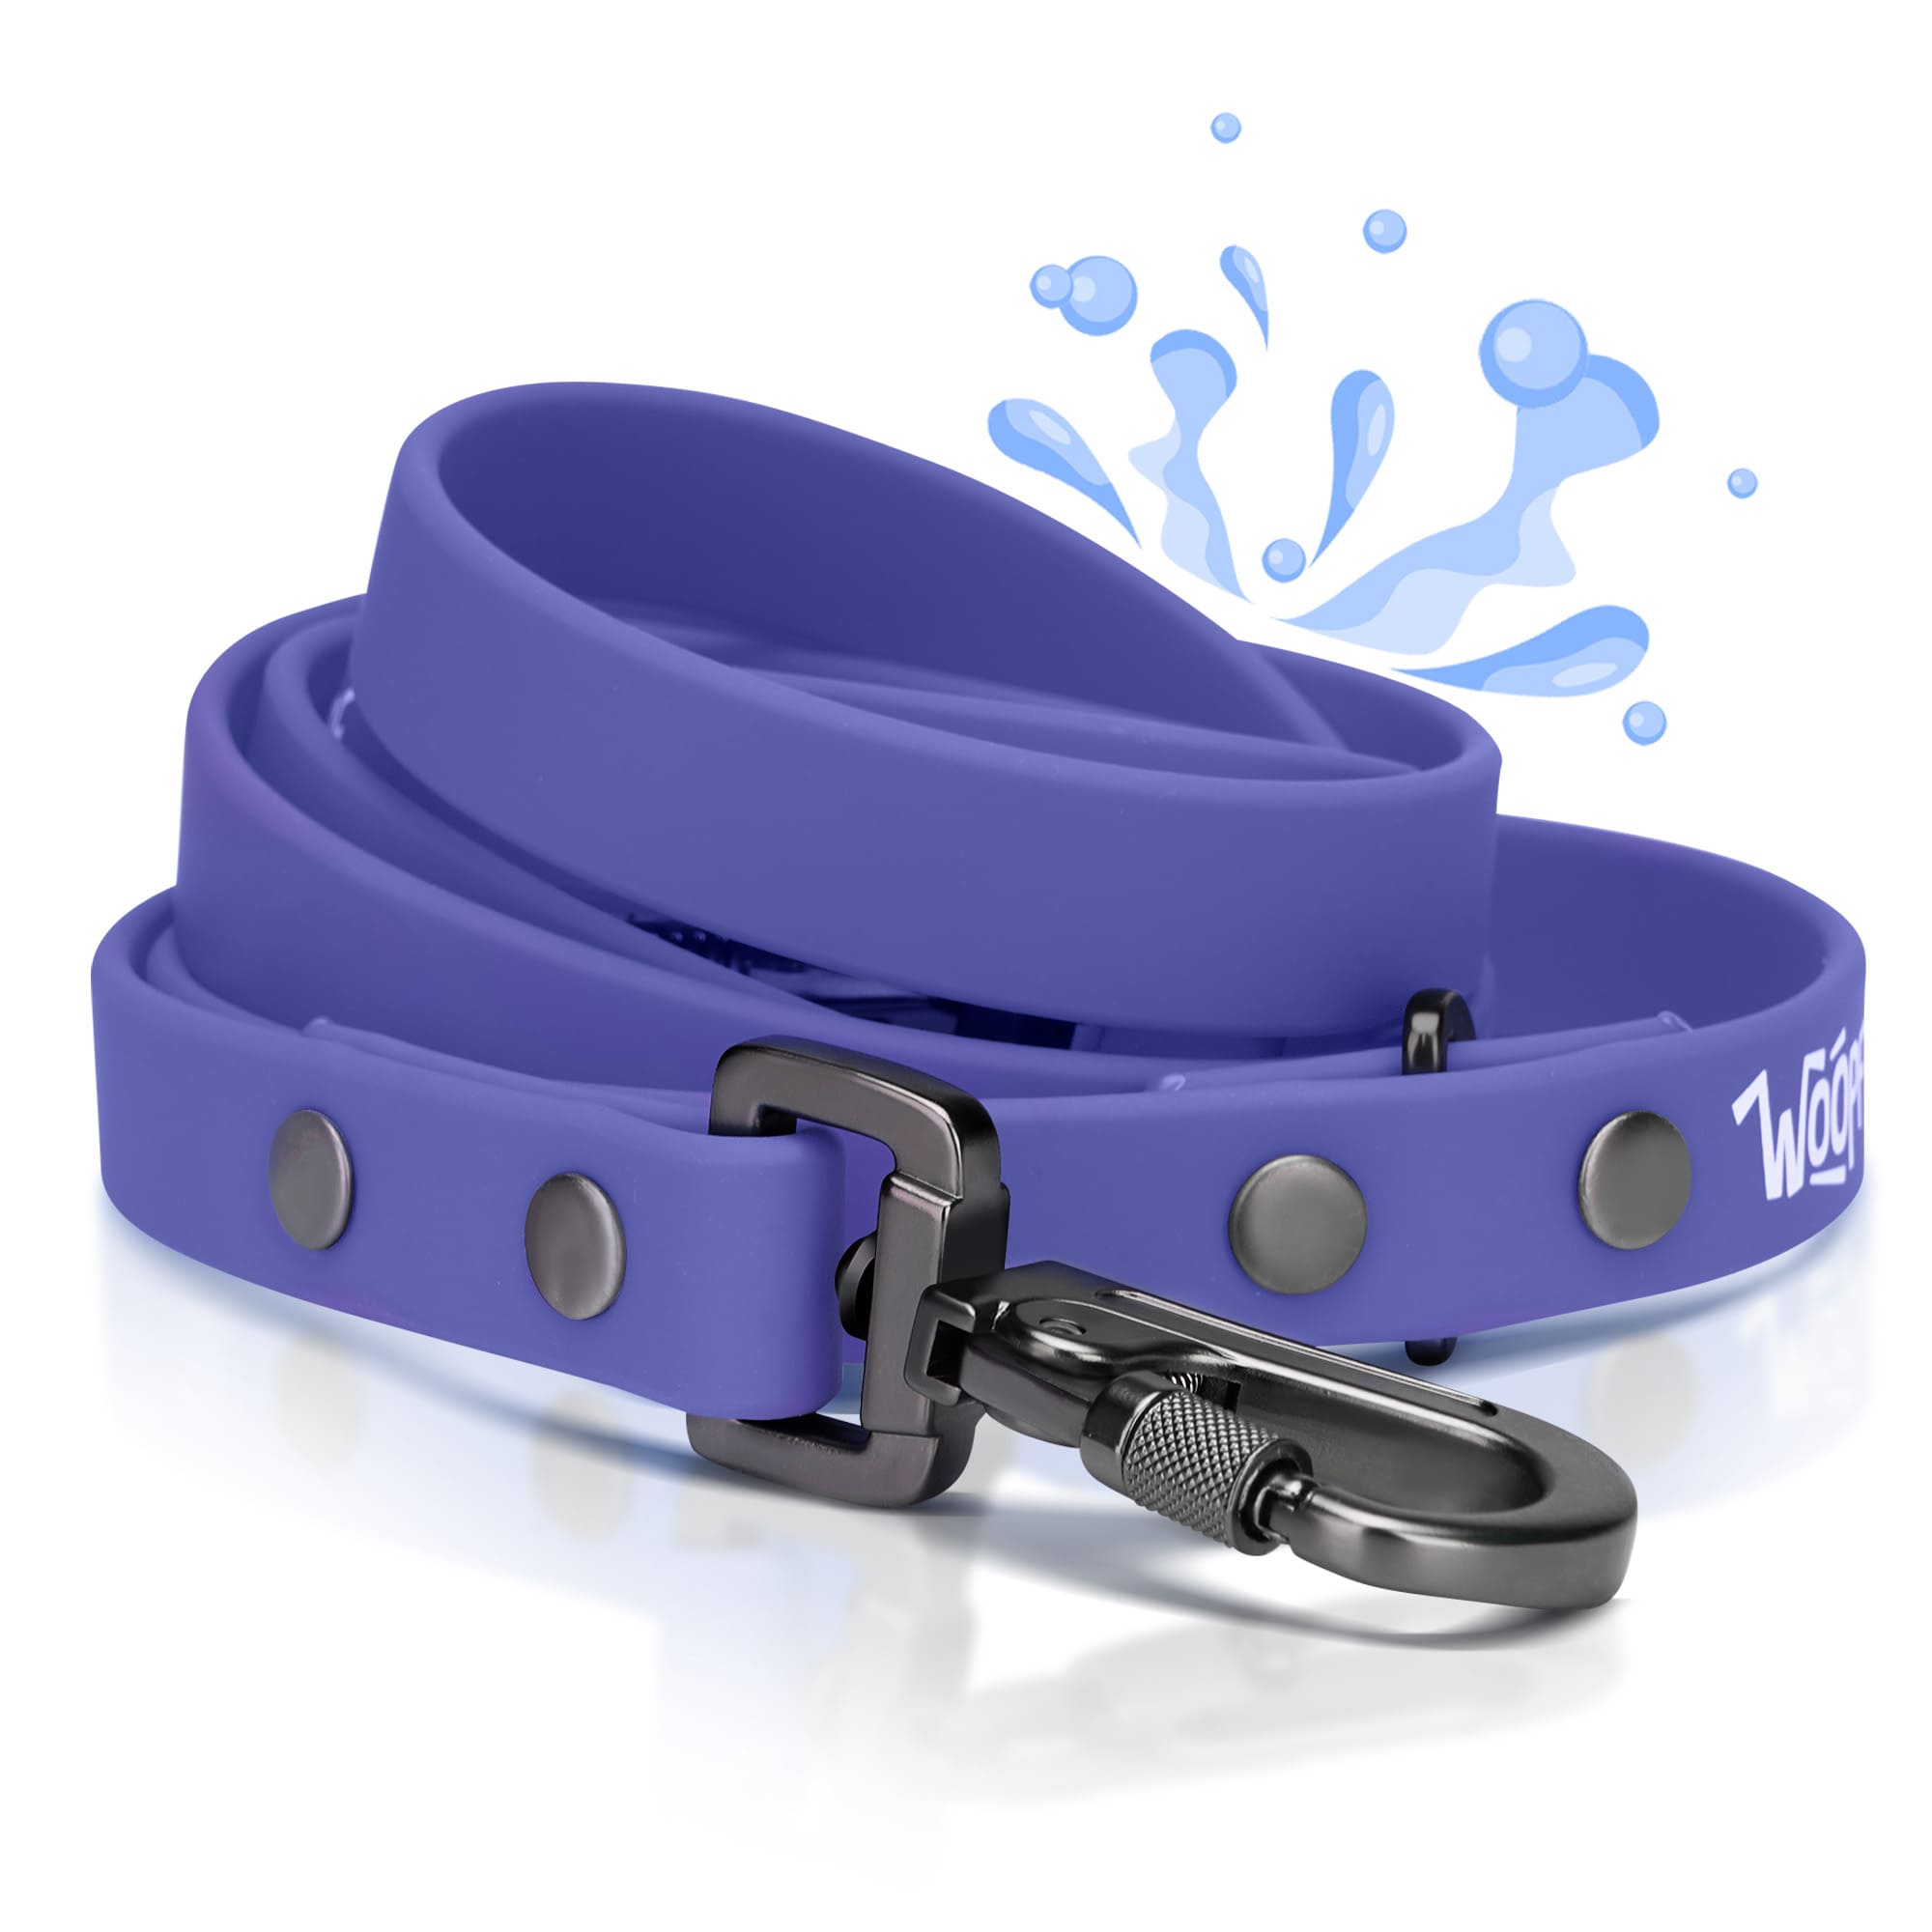 Lightweight Biothane Reflective Waterproof Dog Collar